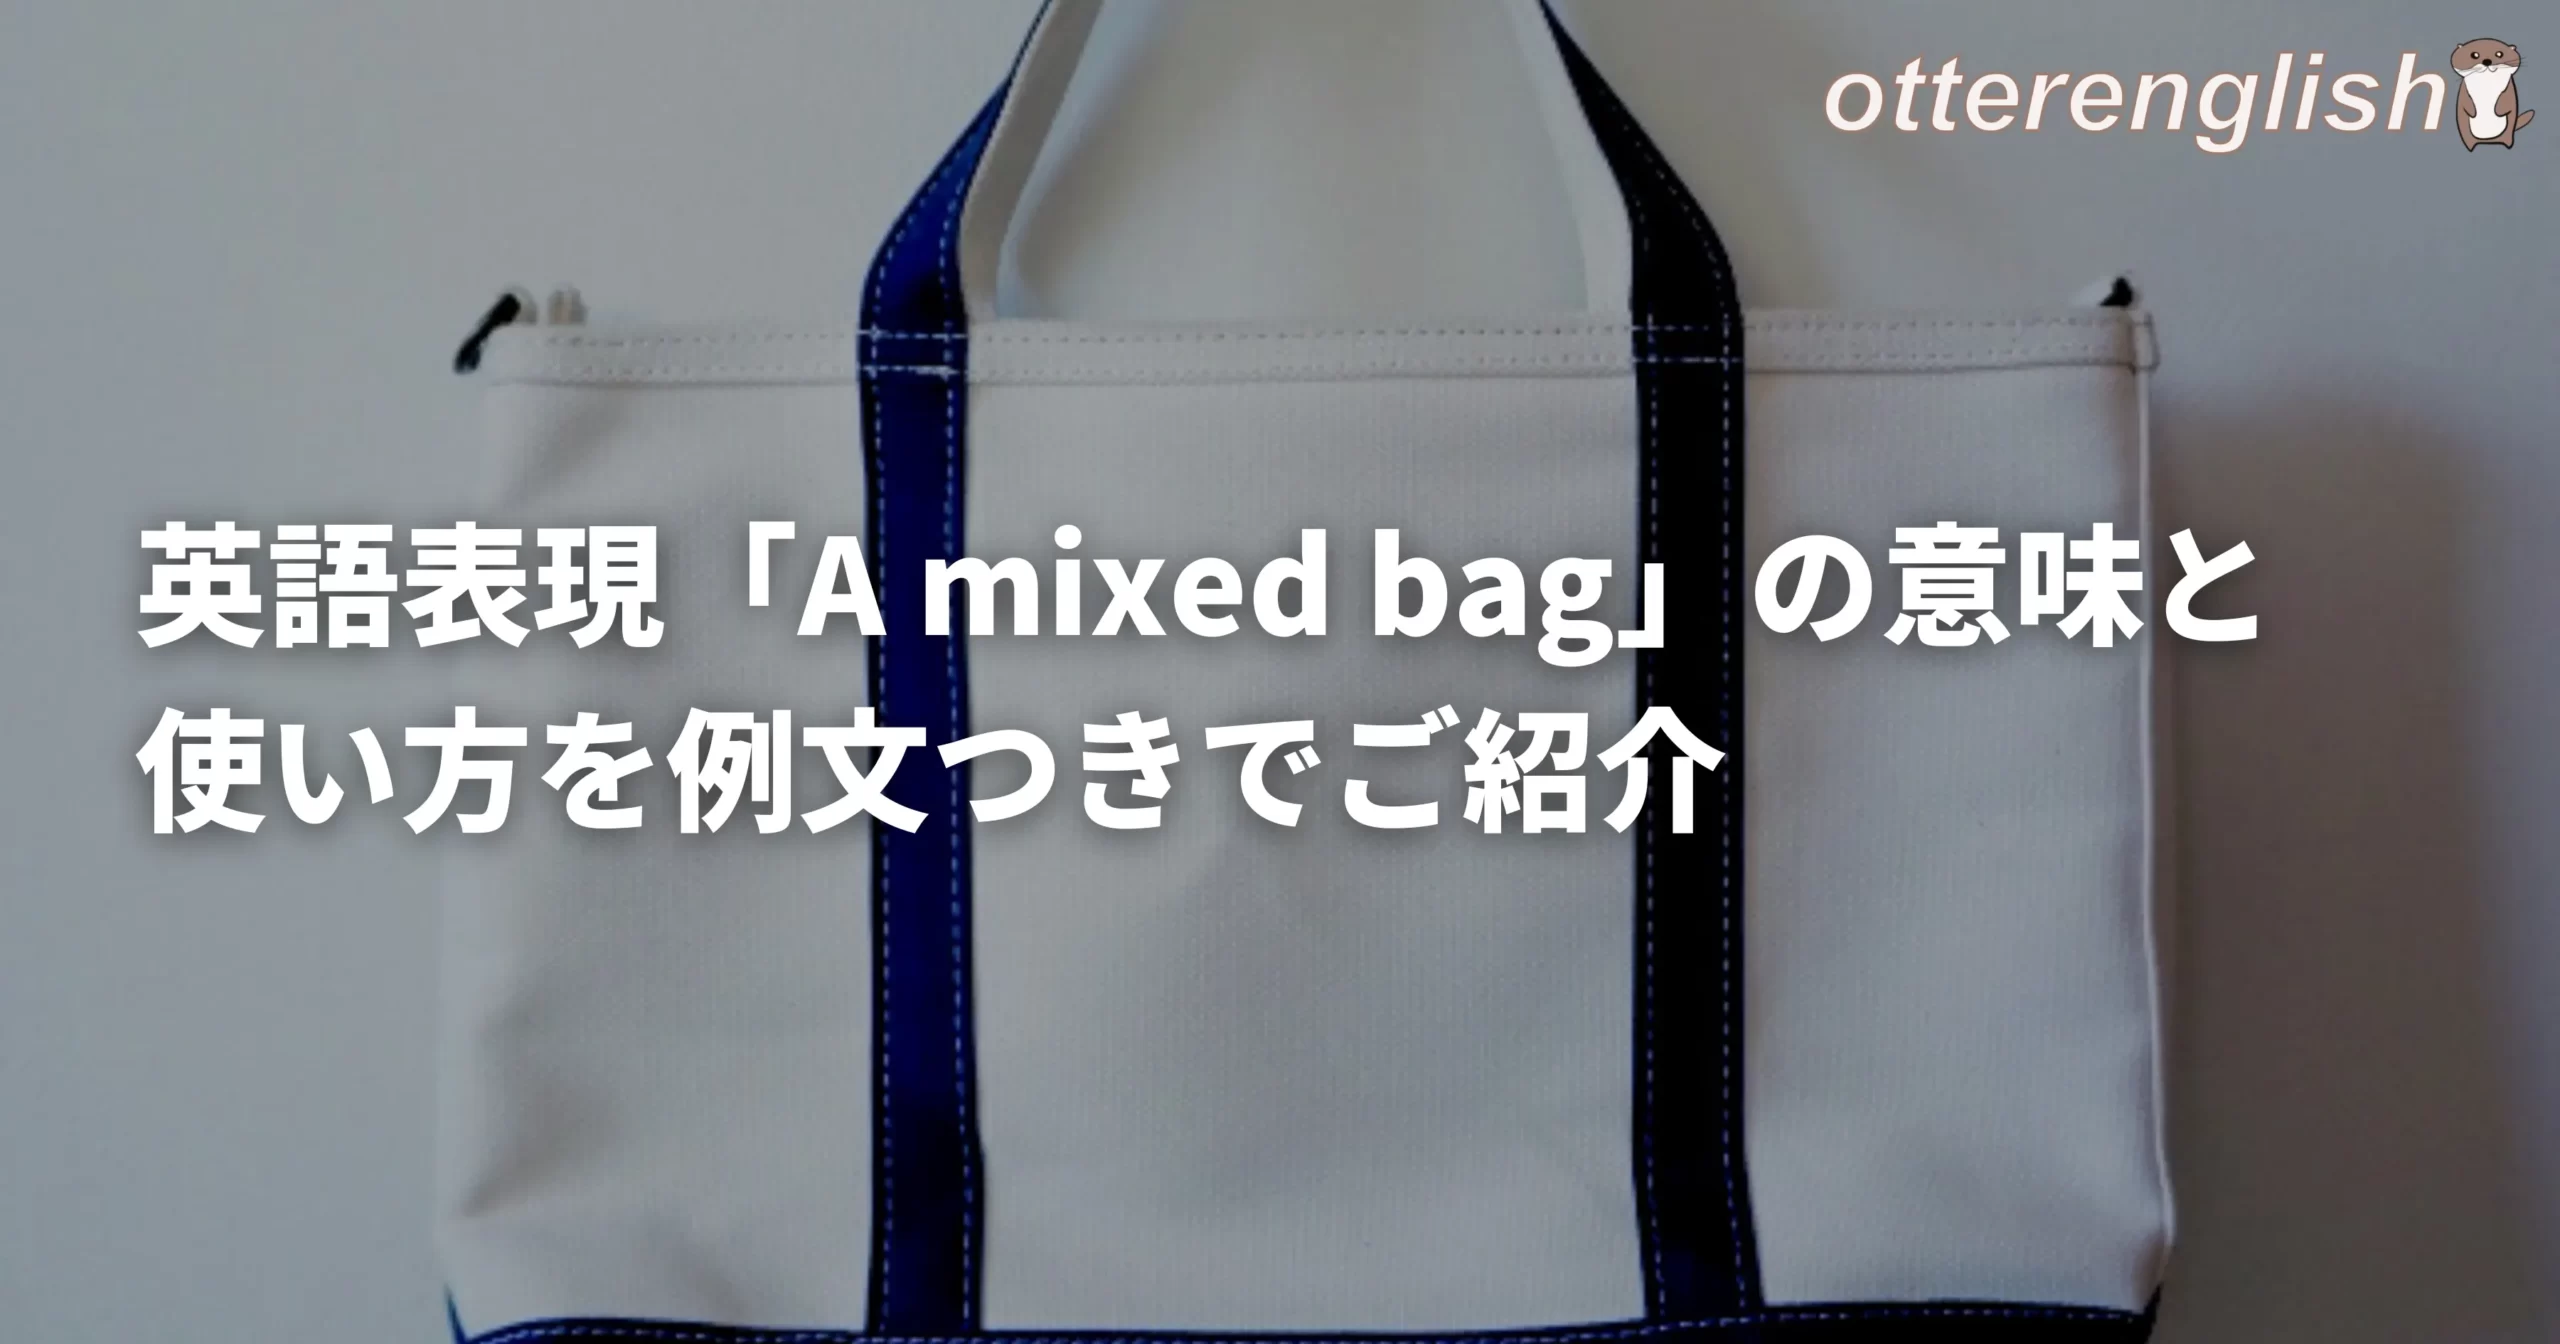 a mixed bagを表すためのバッグの画像